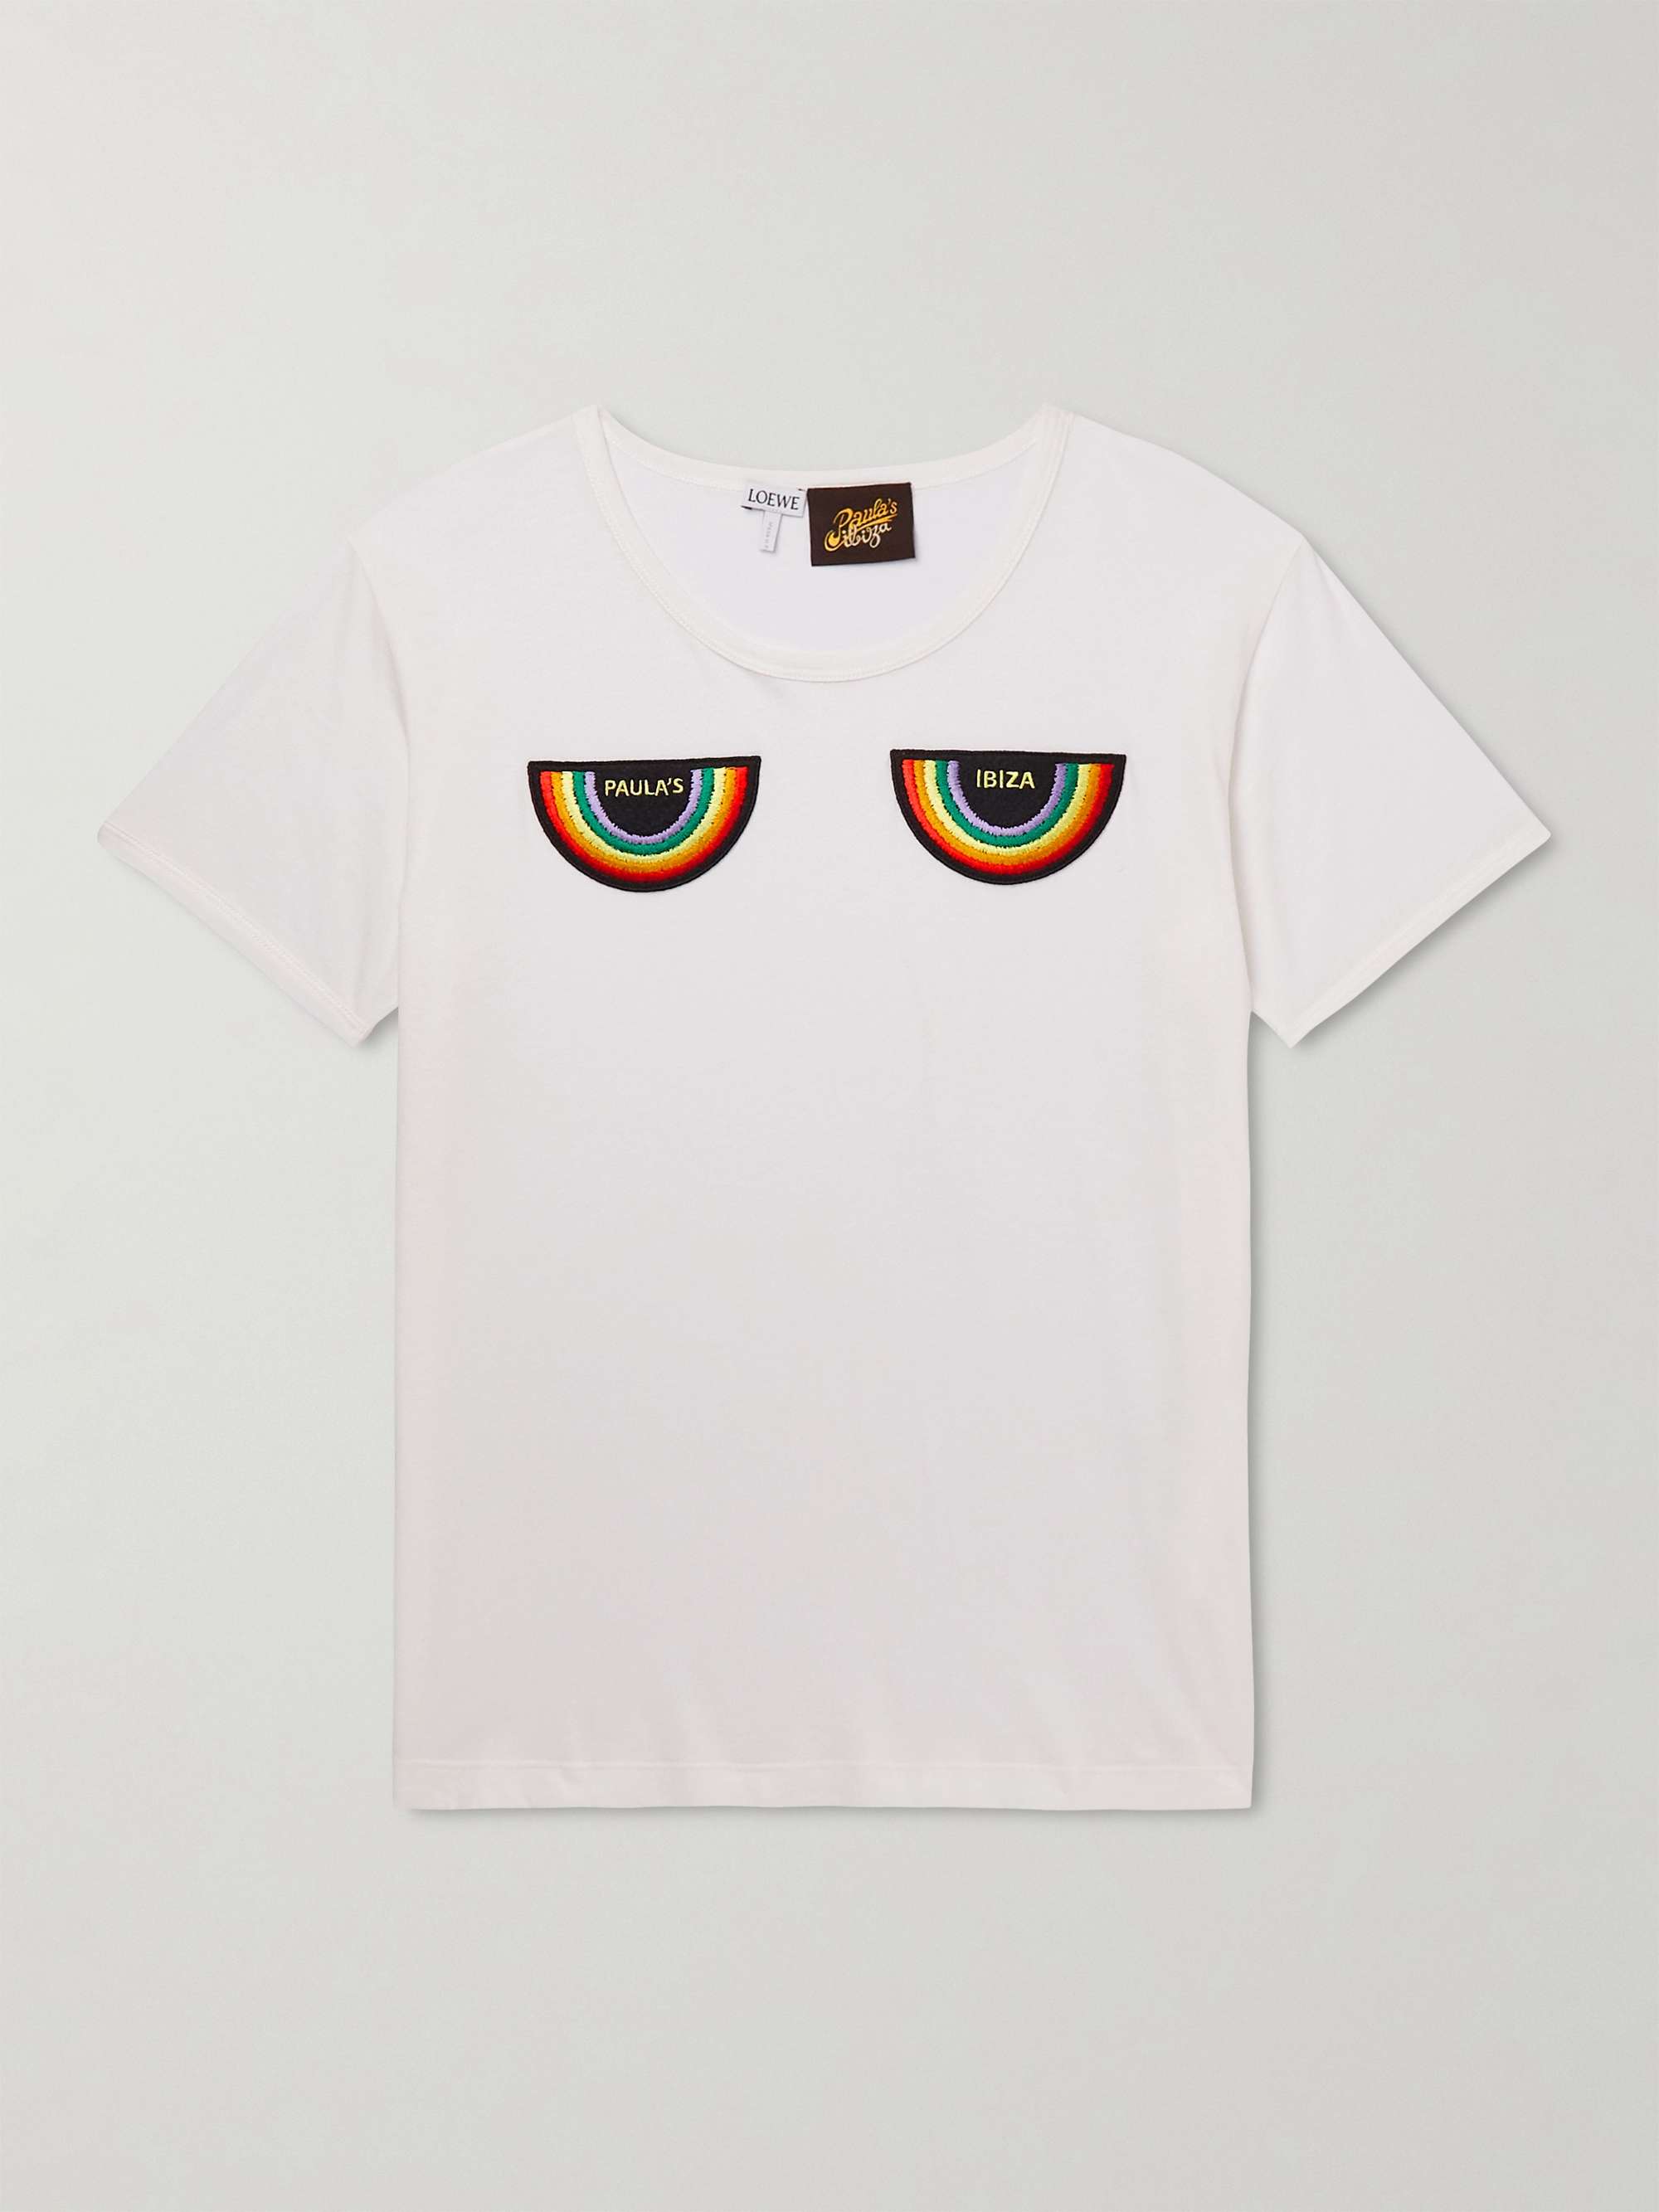 LOEWE + Paula's Ibiza Slim-Fit Logo-Appliquéd Cotton-Jersey T-Shirt